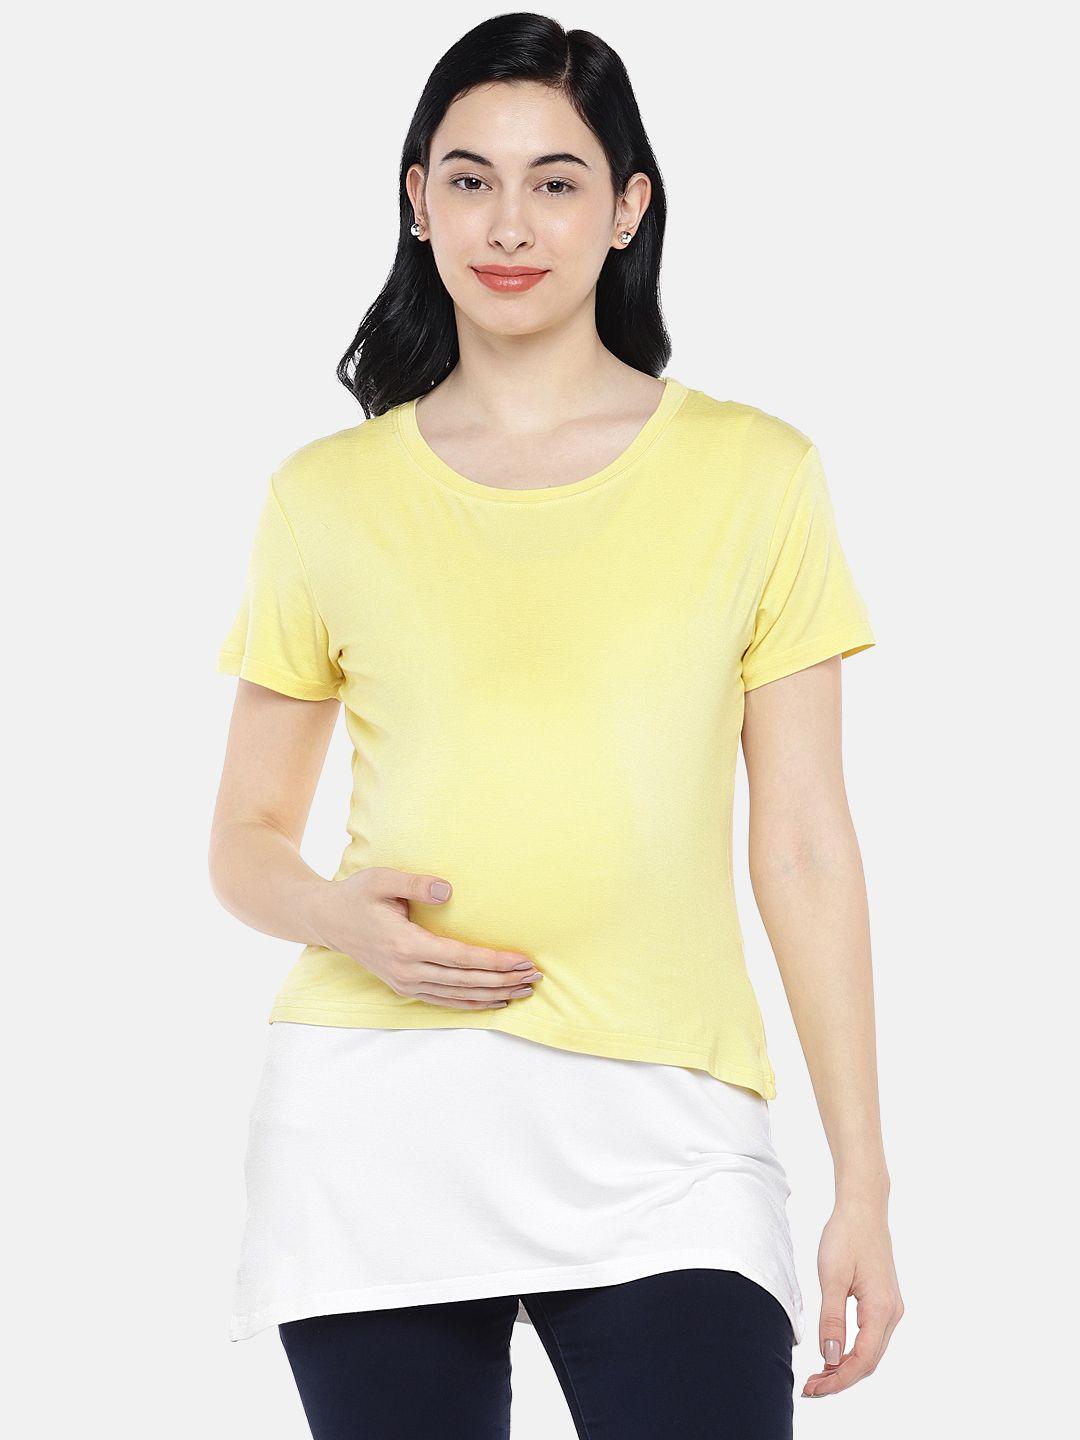 blush 9 maternity women yellow colourblocked tiered top